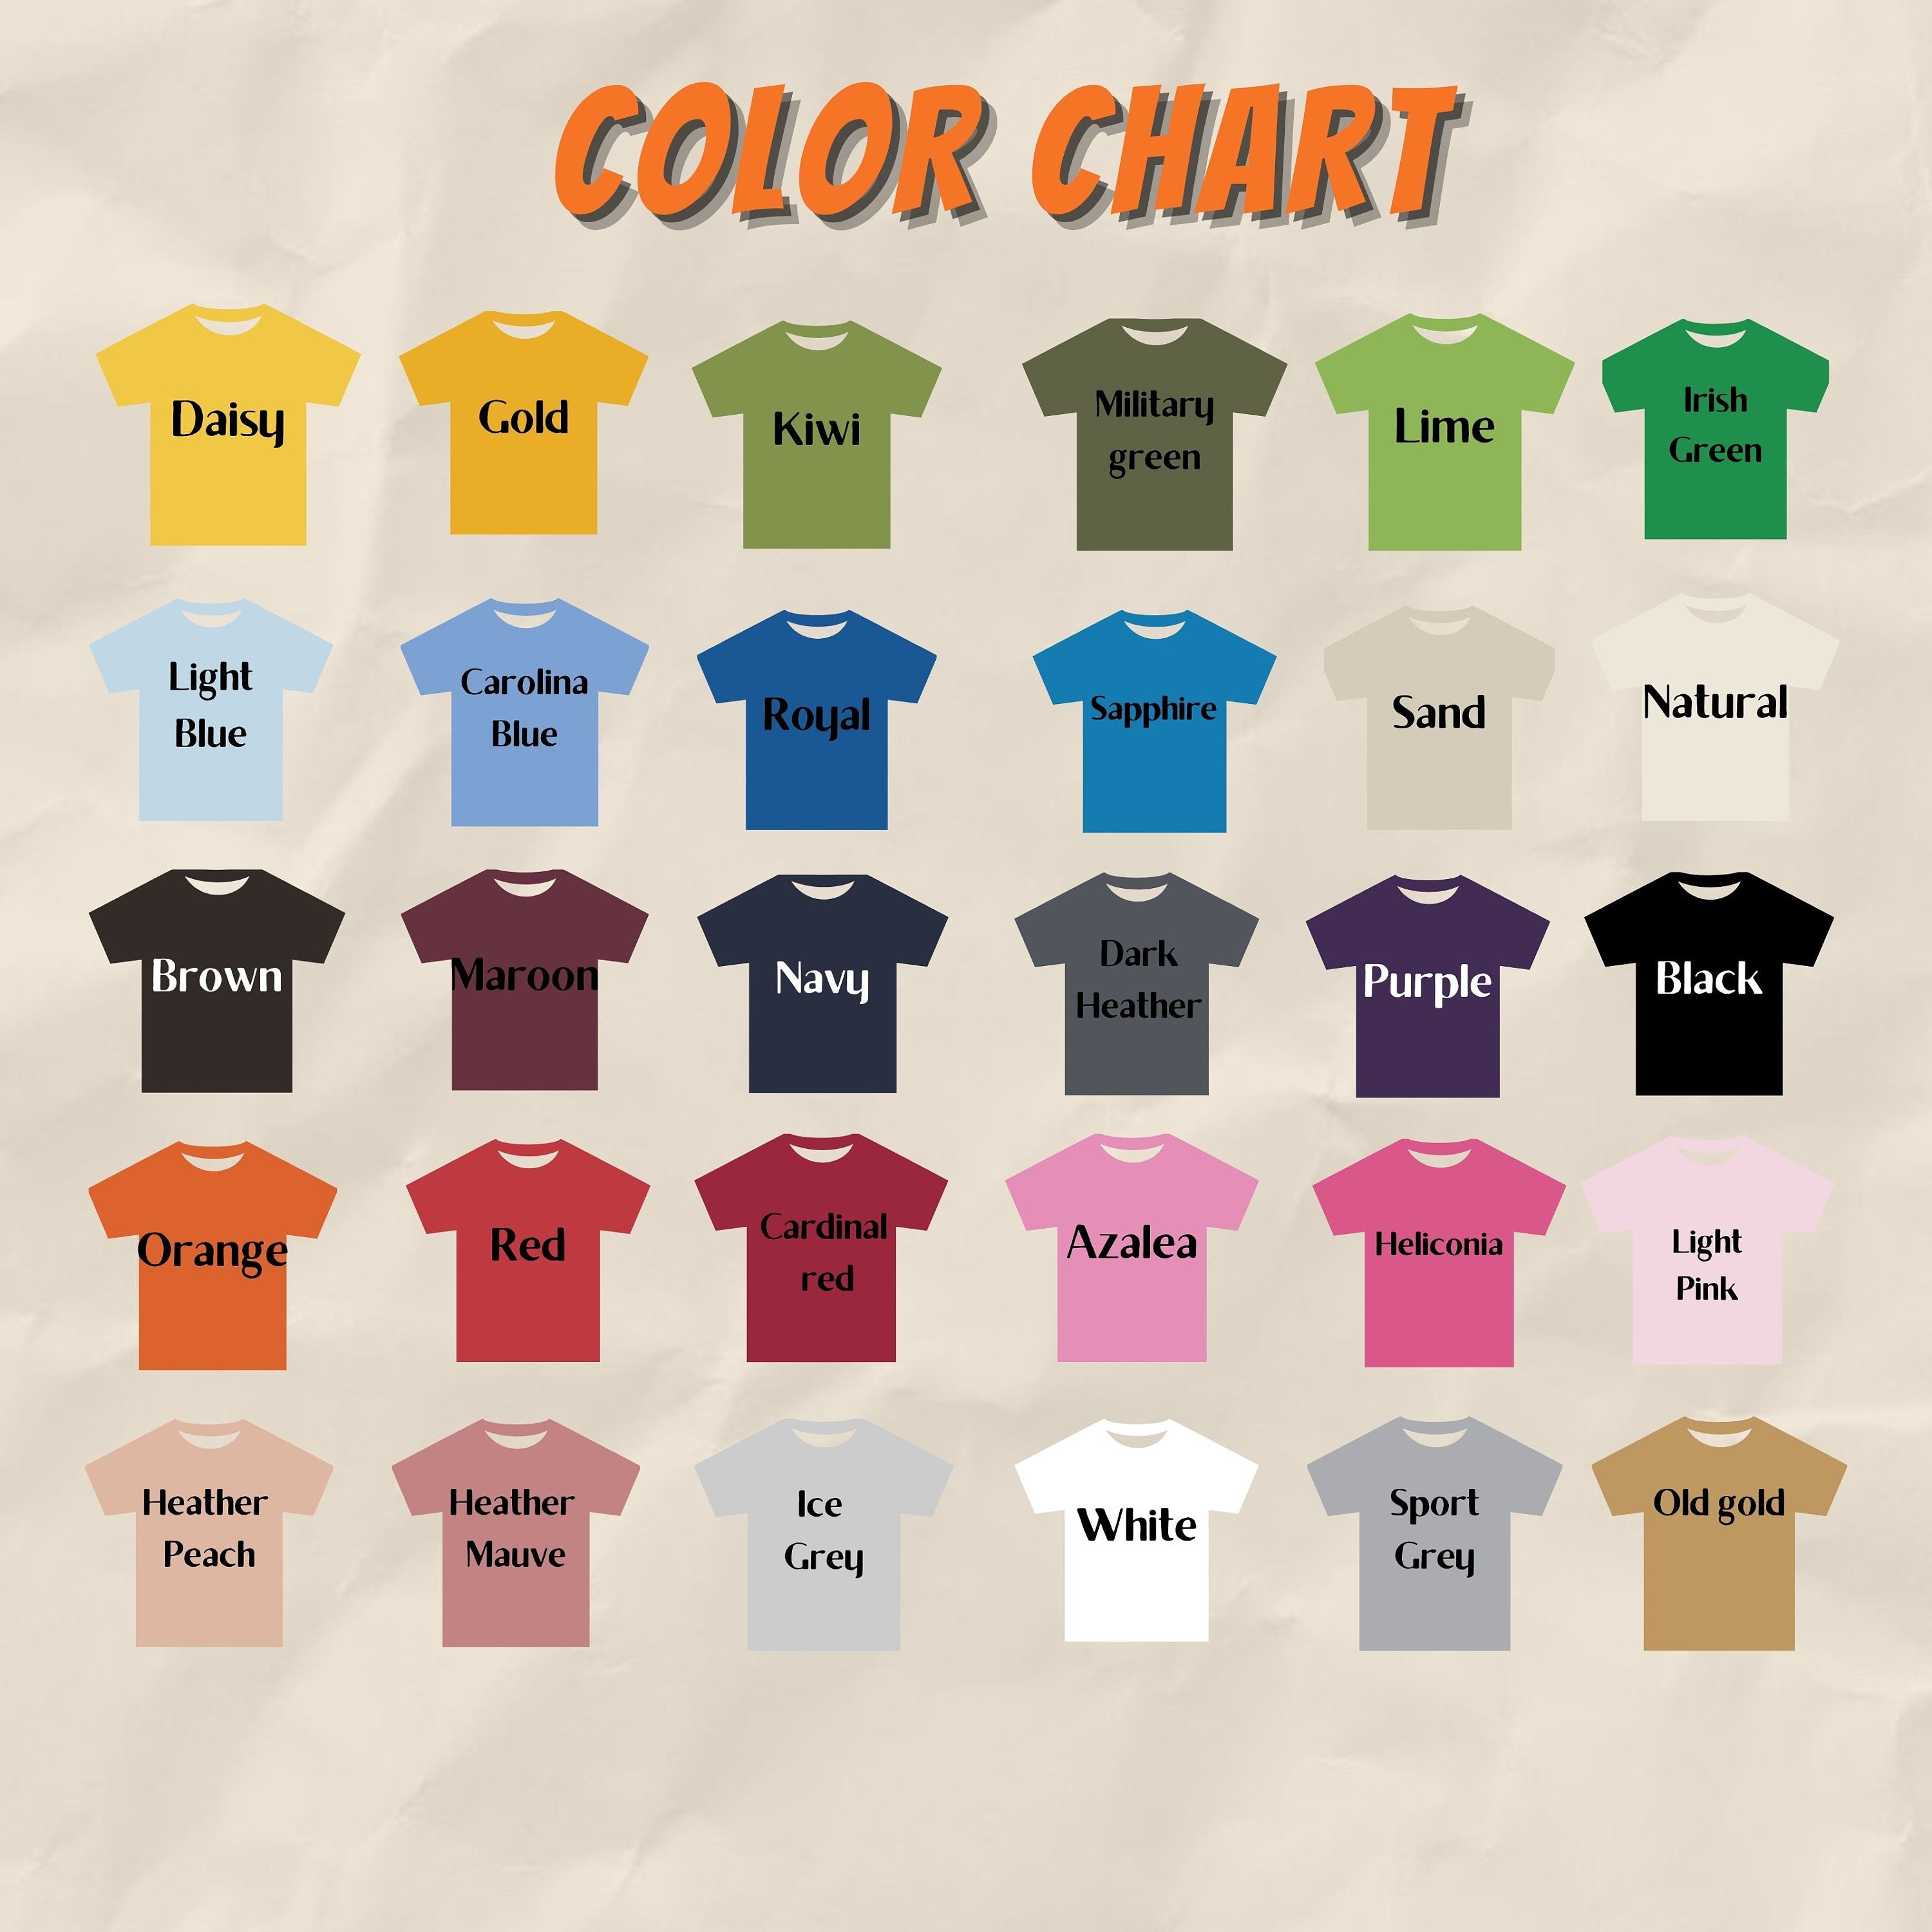 Discover 7 Dwarfs Group Shirt, 7 Dwarf Costume Group Shirt, 7 Dwarf Family Shirt